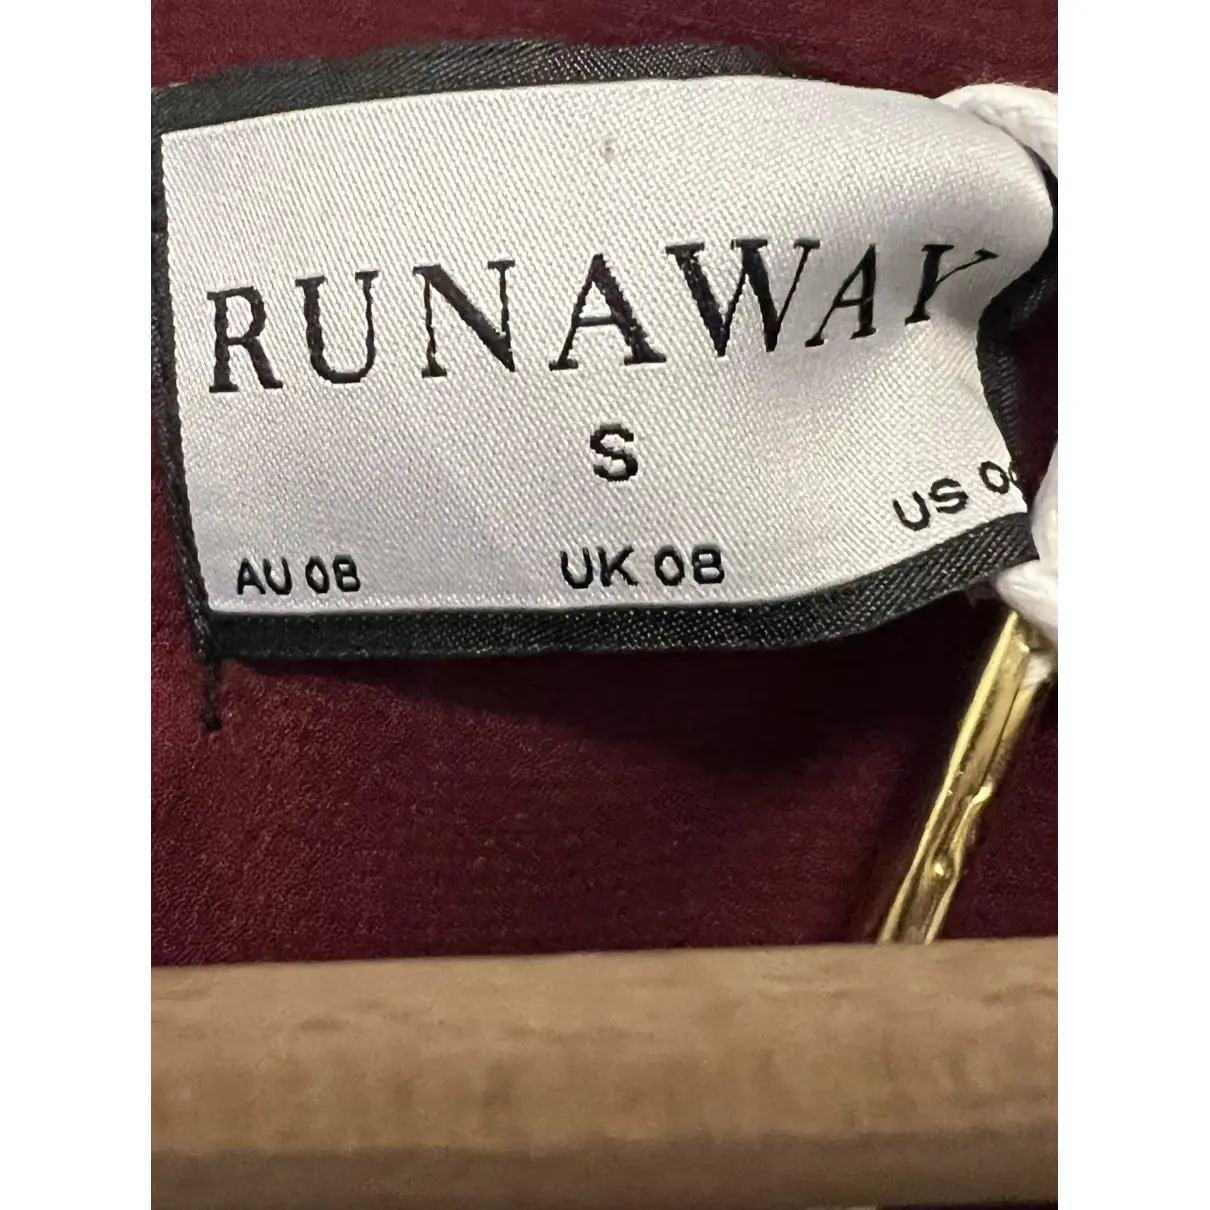 Buy Runaway The Label Mini dress online